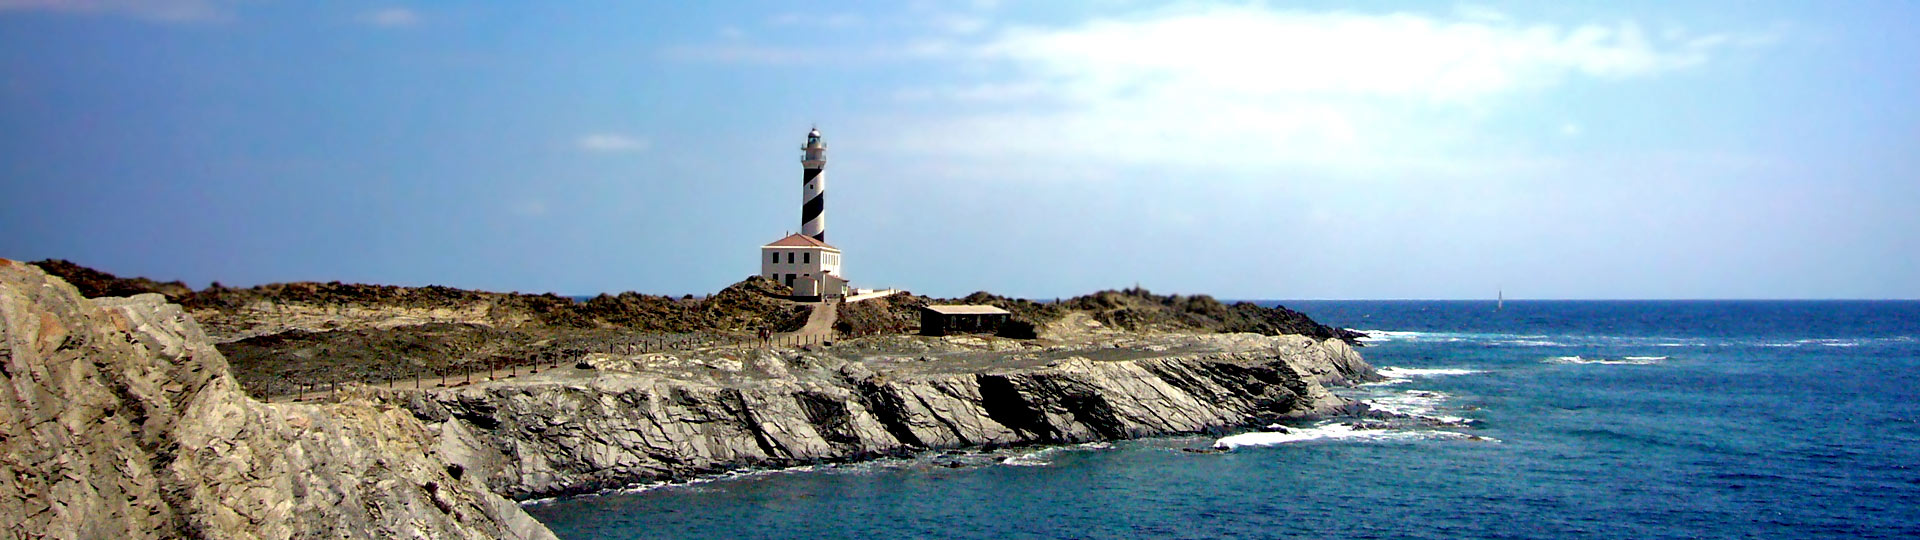 Cabo Favaritx lighthouse, Menorca